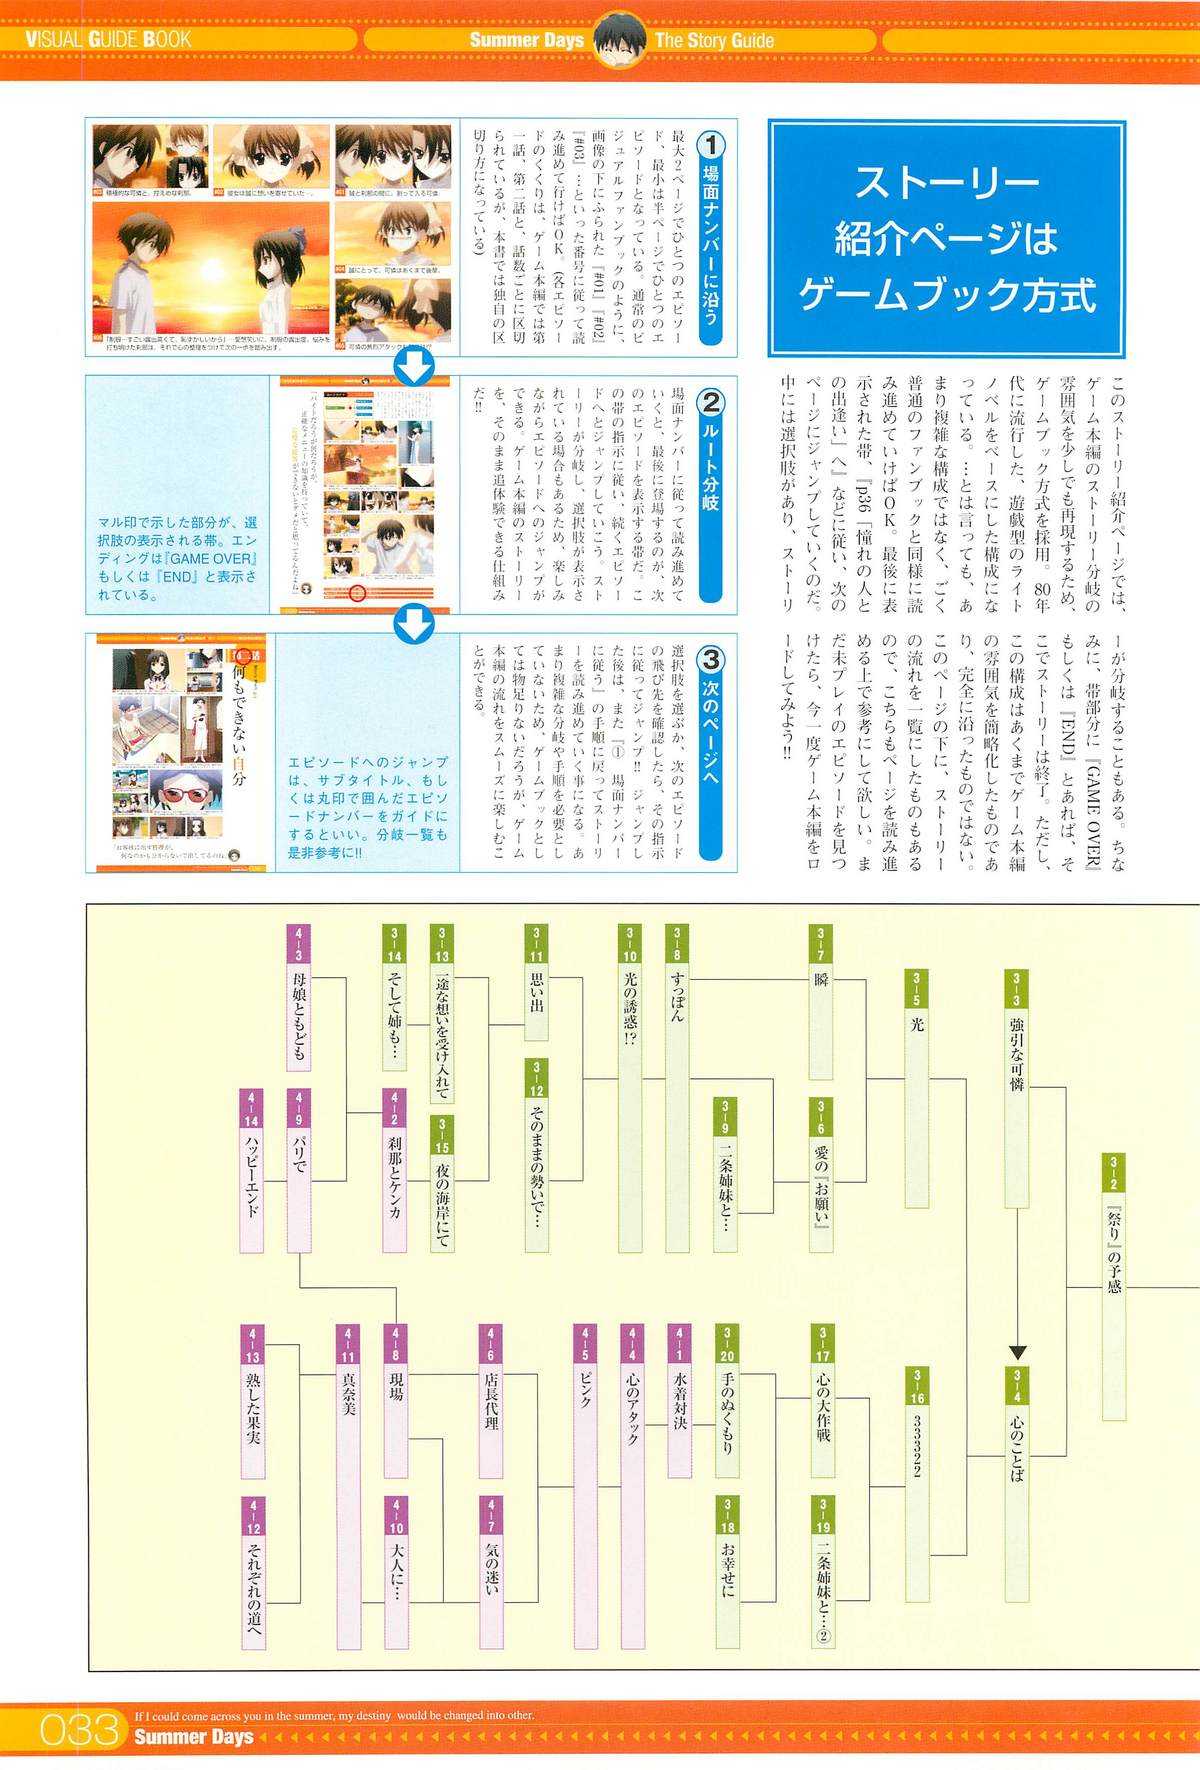 SummerDays Visual Guide Book SummerDays ビジュアル・ガイドブック